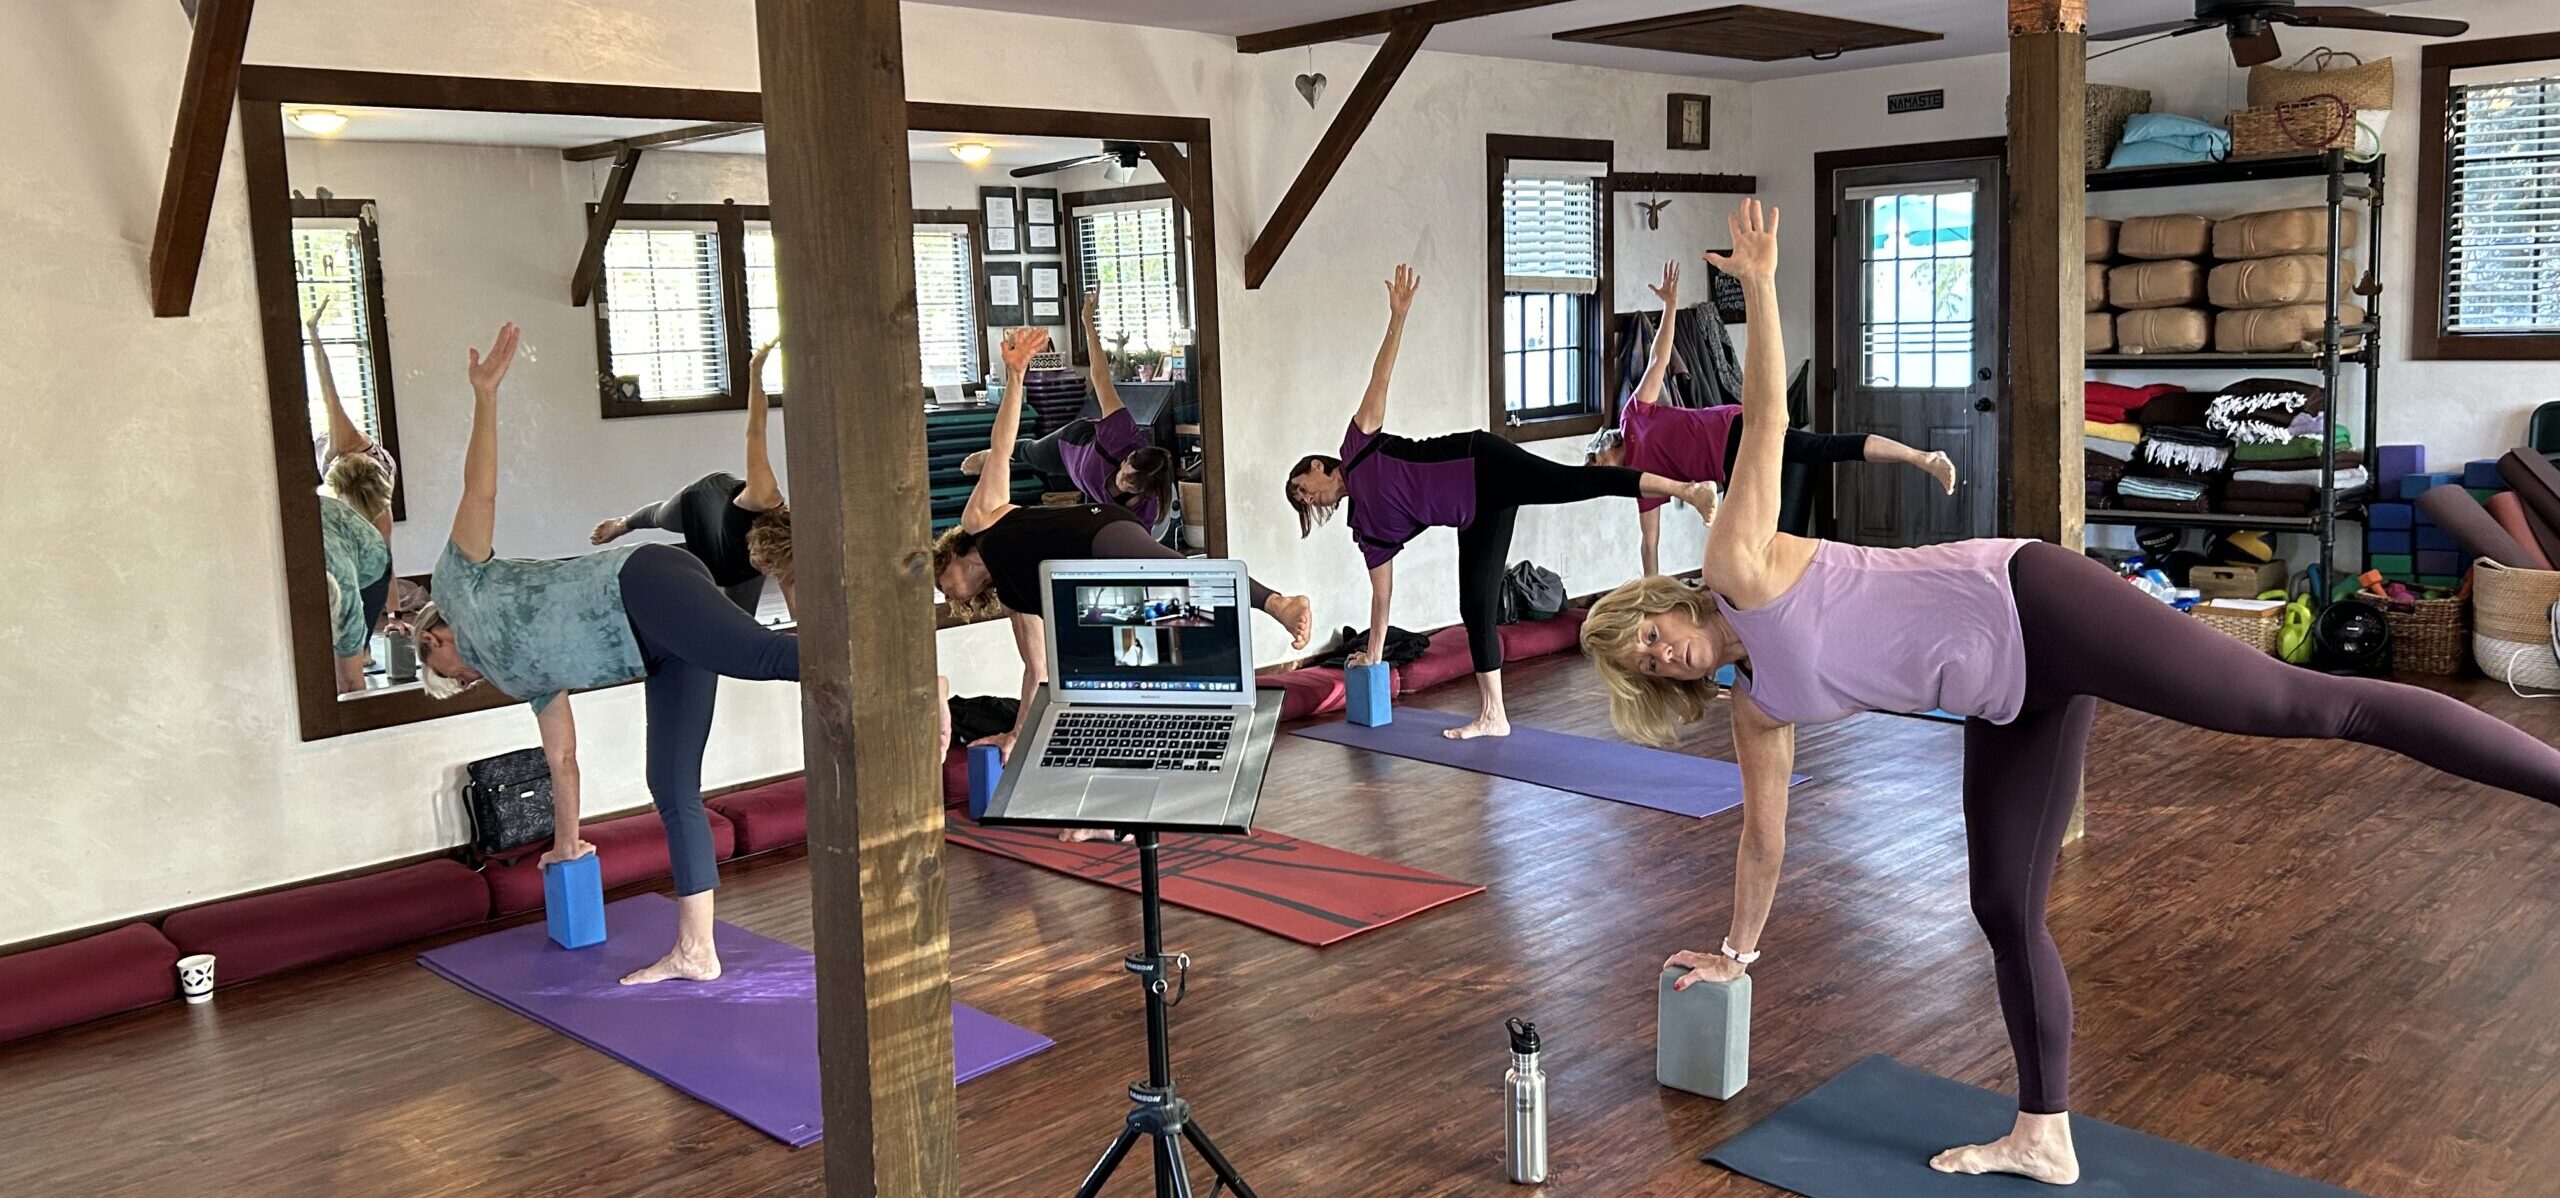 Yoga 101 Class at Evolve Fitness, Hamden, CT